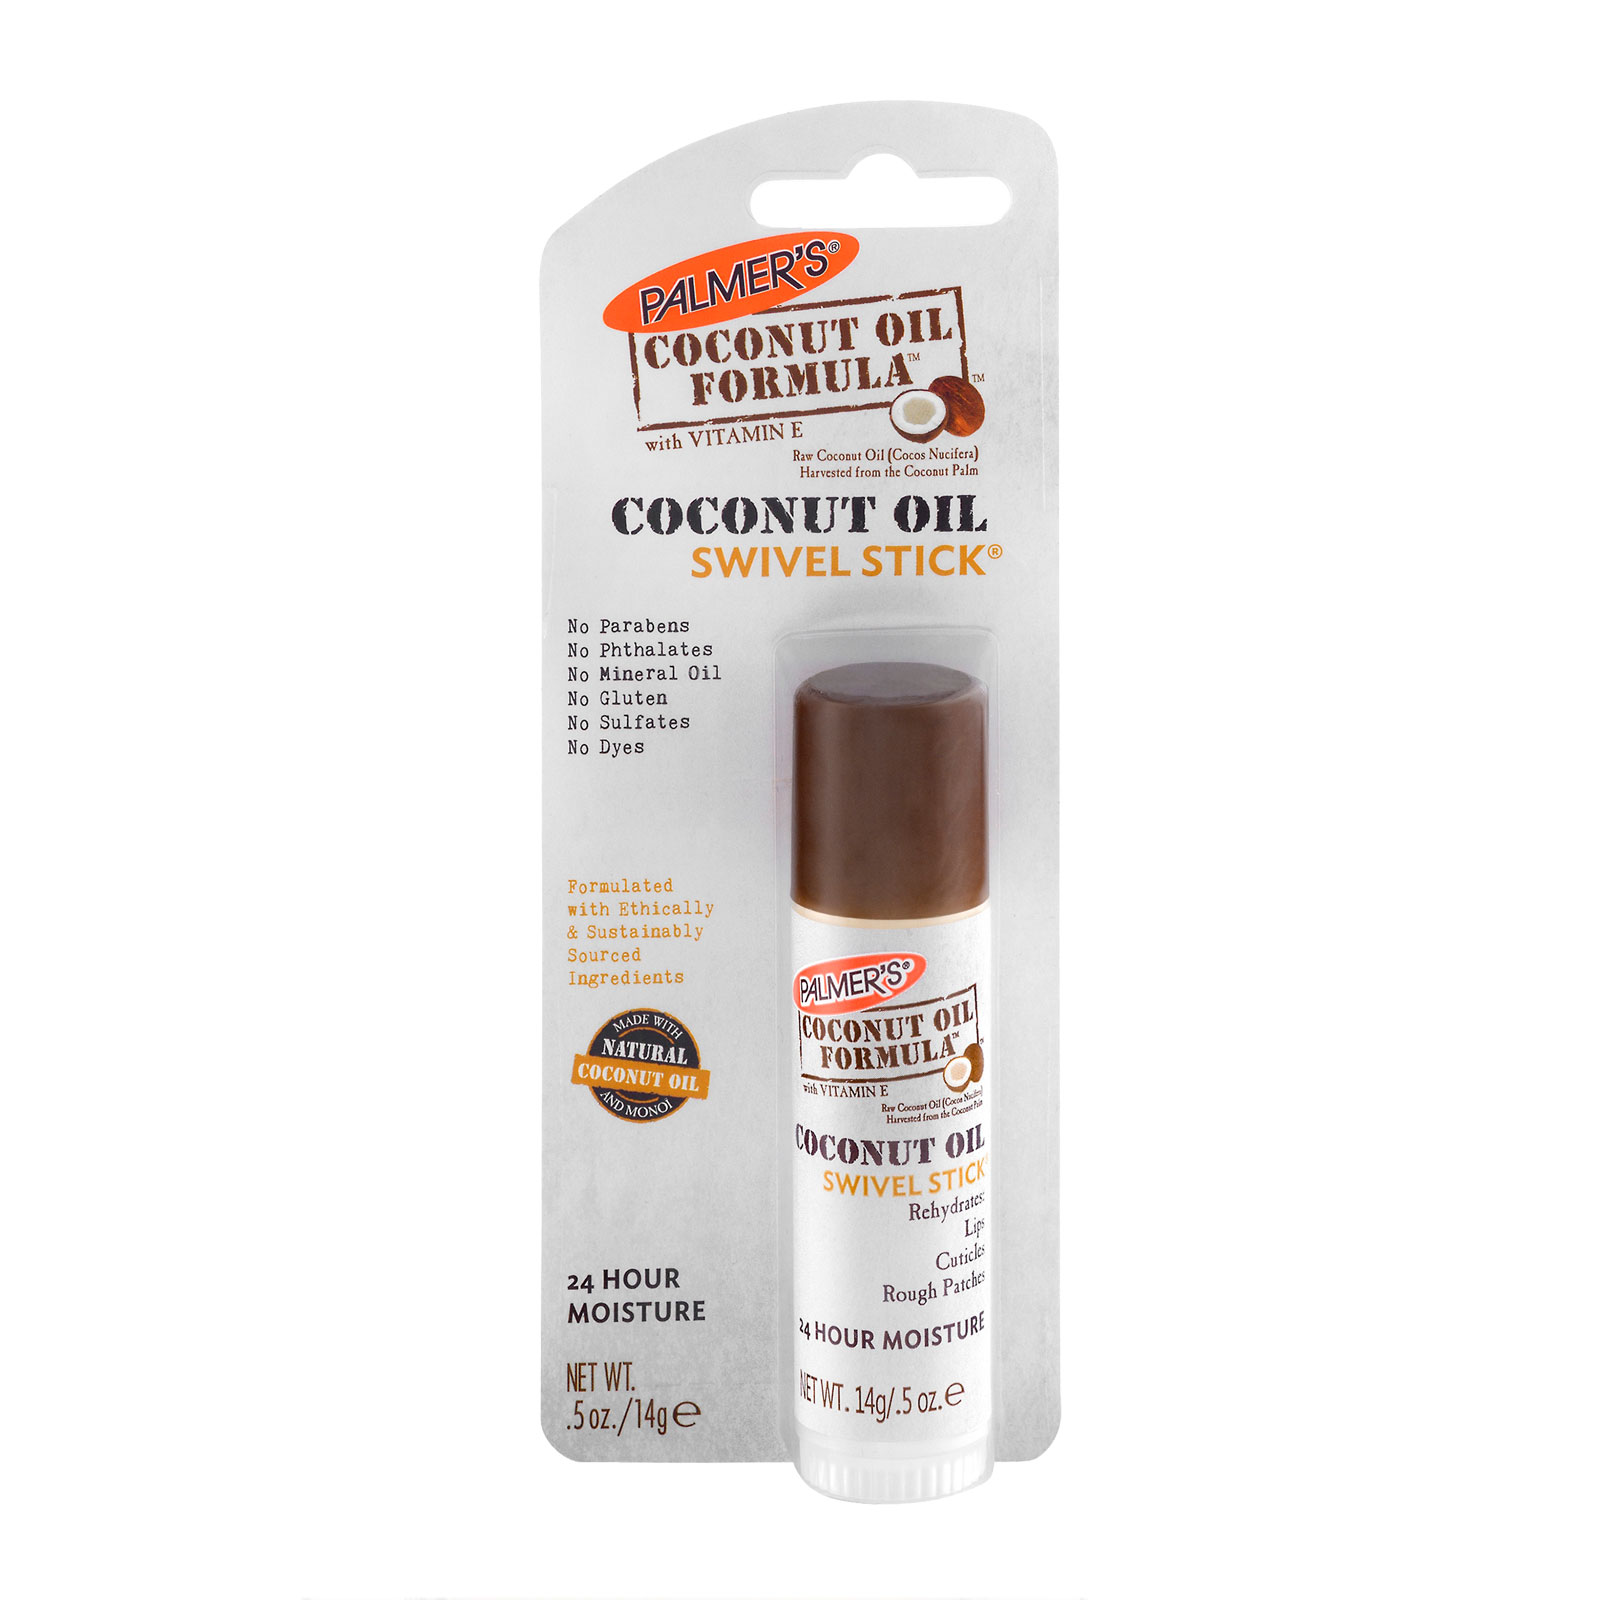 Palmer's Coconut Oil Formula Coconut Oil Swivel Stick 14G